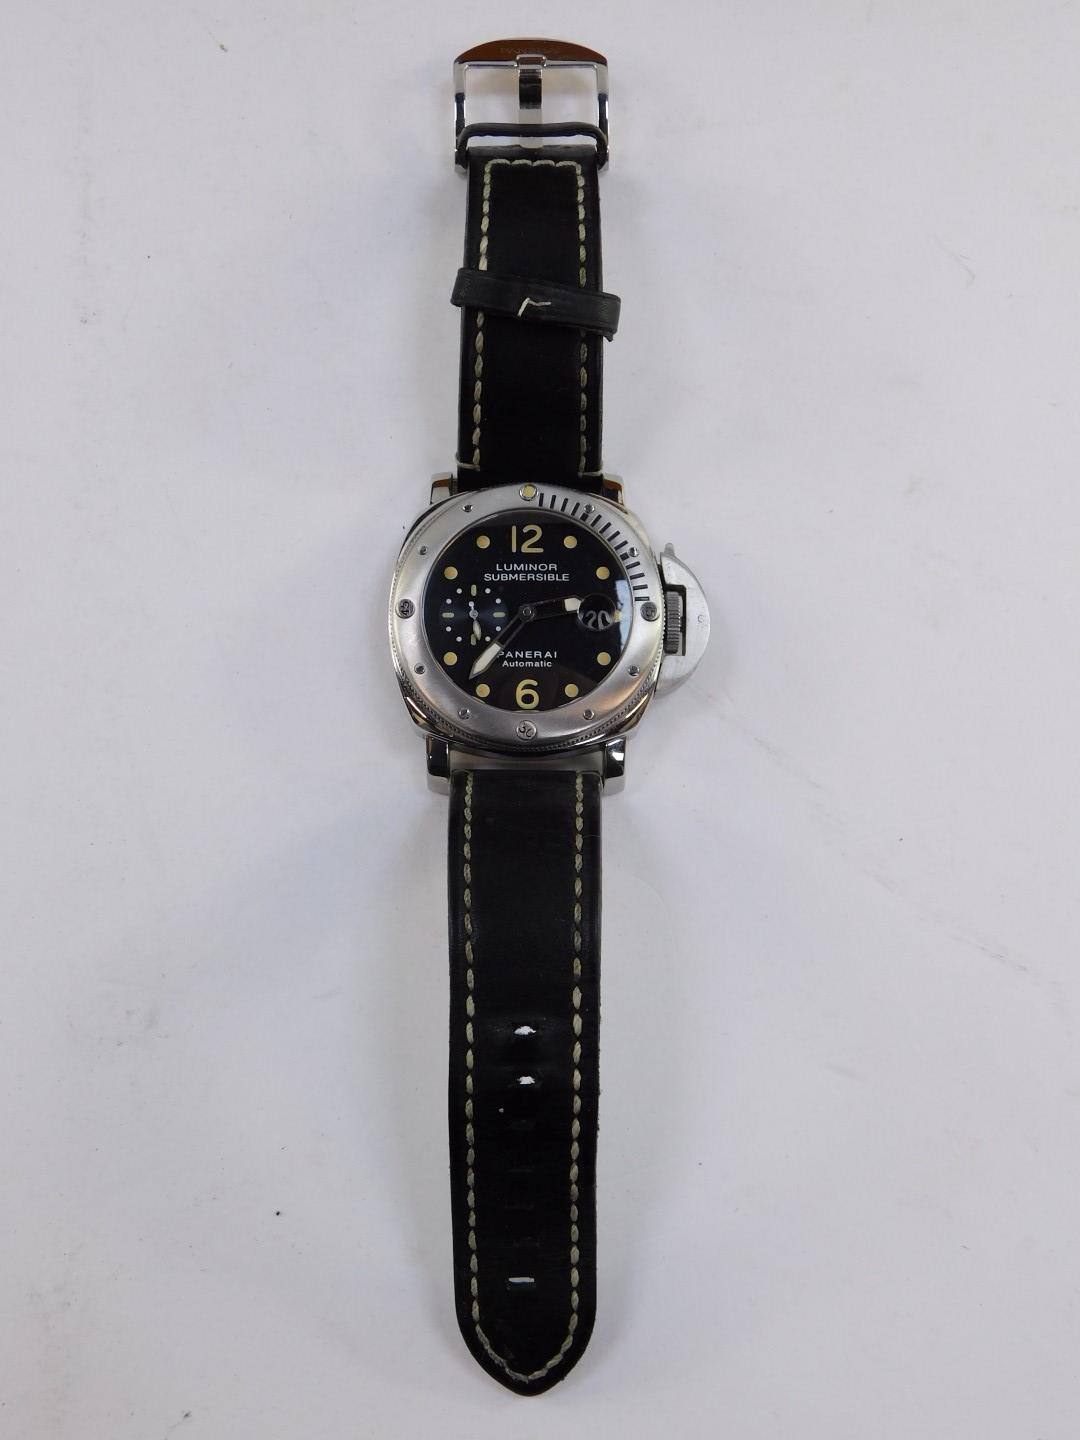 A Panerai Submersible gentleman's stainless steel cased wristwatch, Luminor submersible circular bla - Bild 3 aus 5